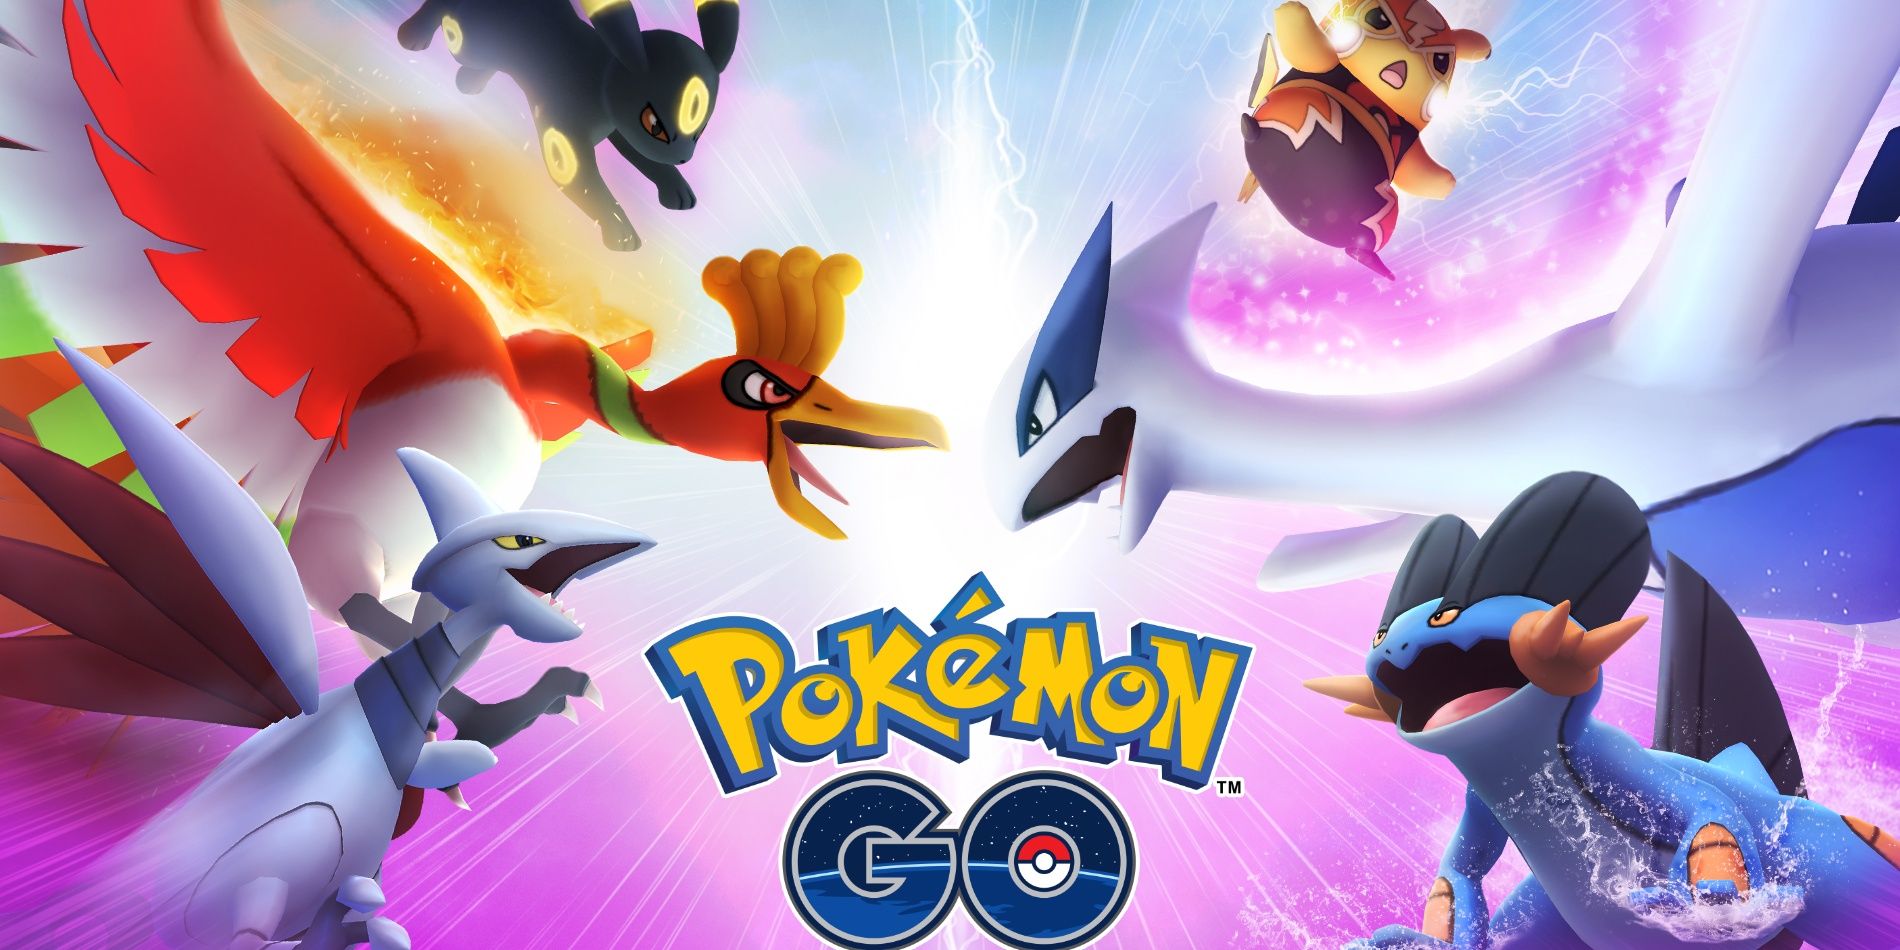 Pokémon GO promo art